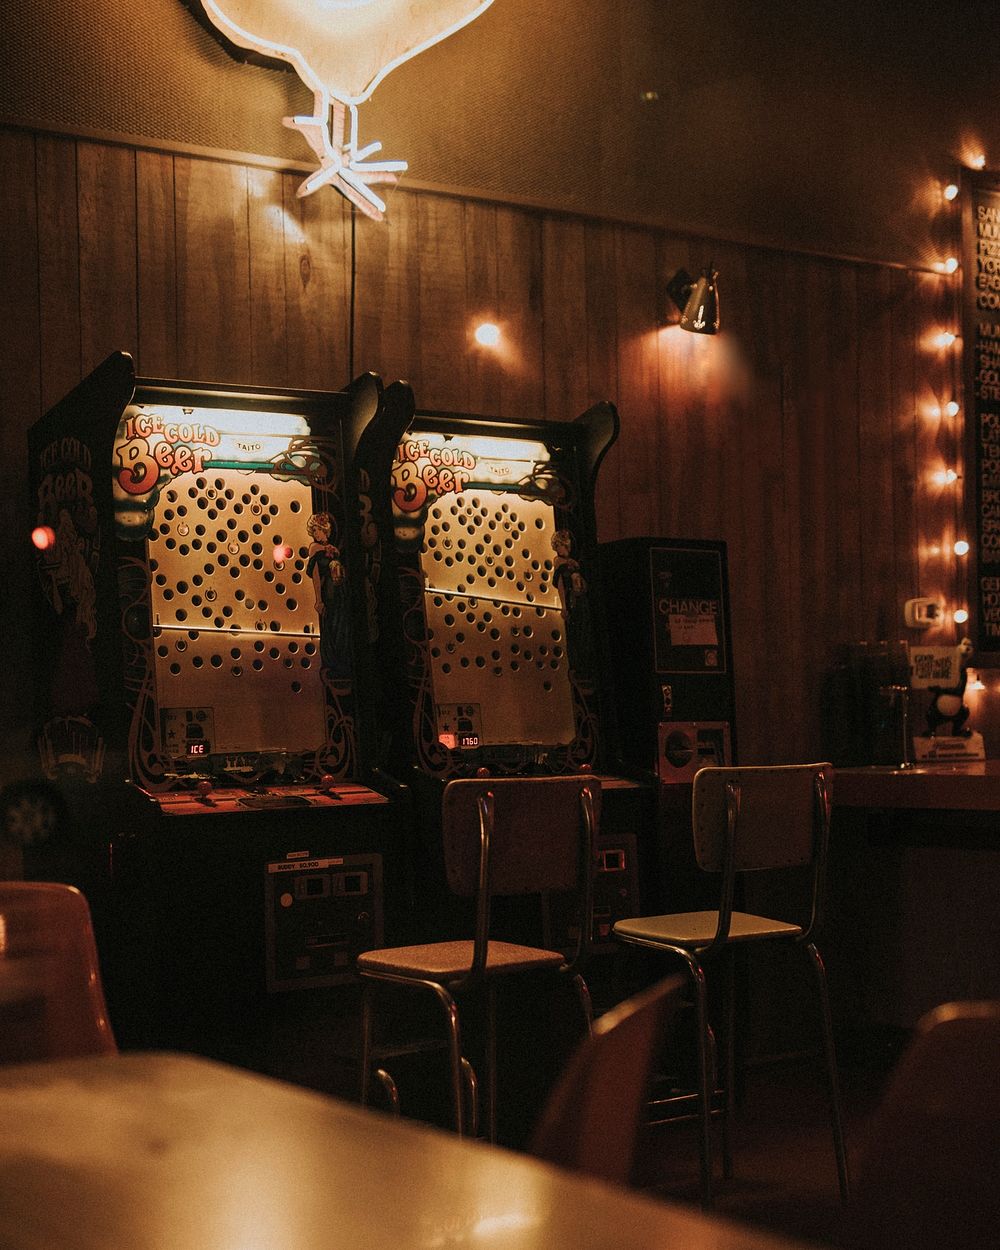 Reatro arcade games at a bar